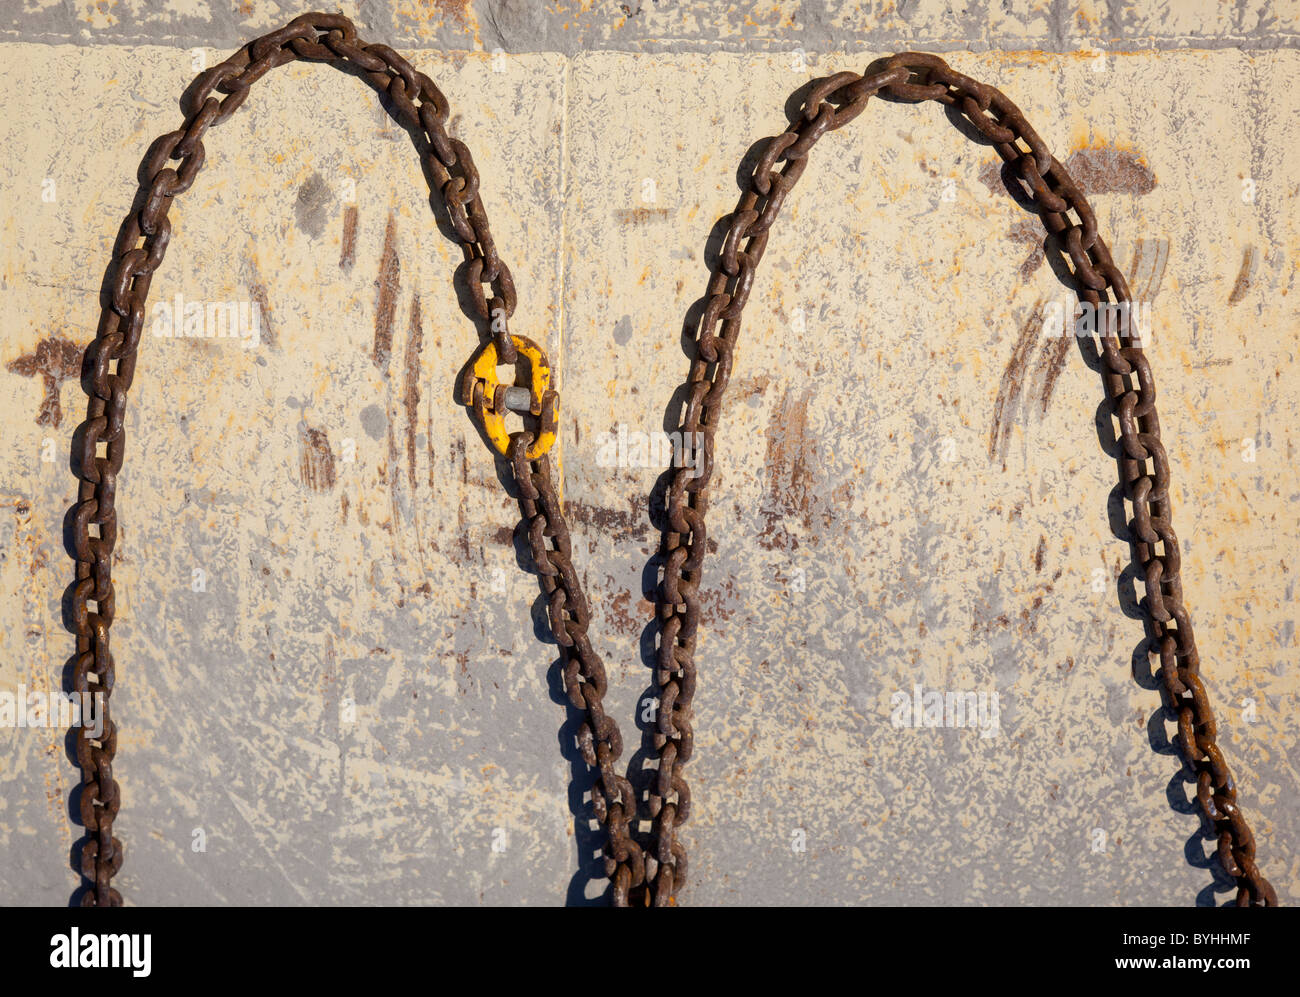 U shaped loops of rusty iron chain Stock Photo